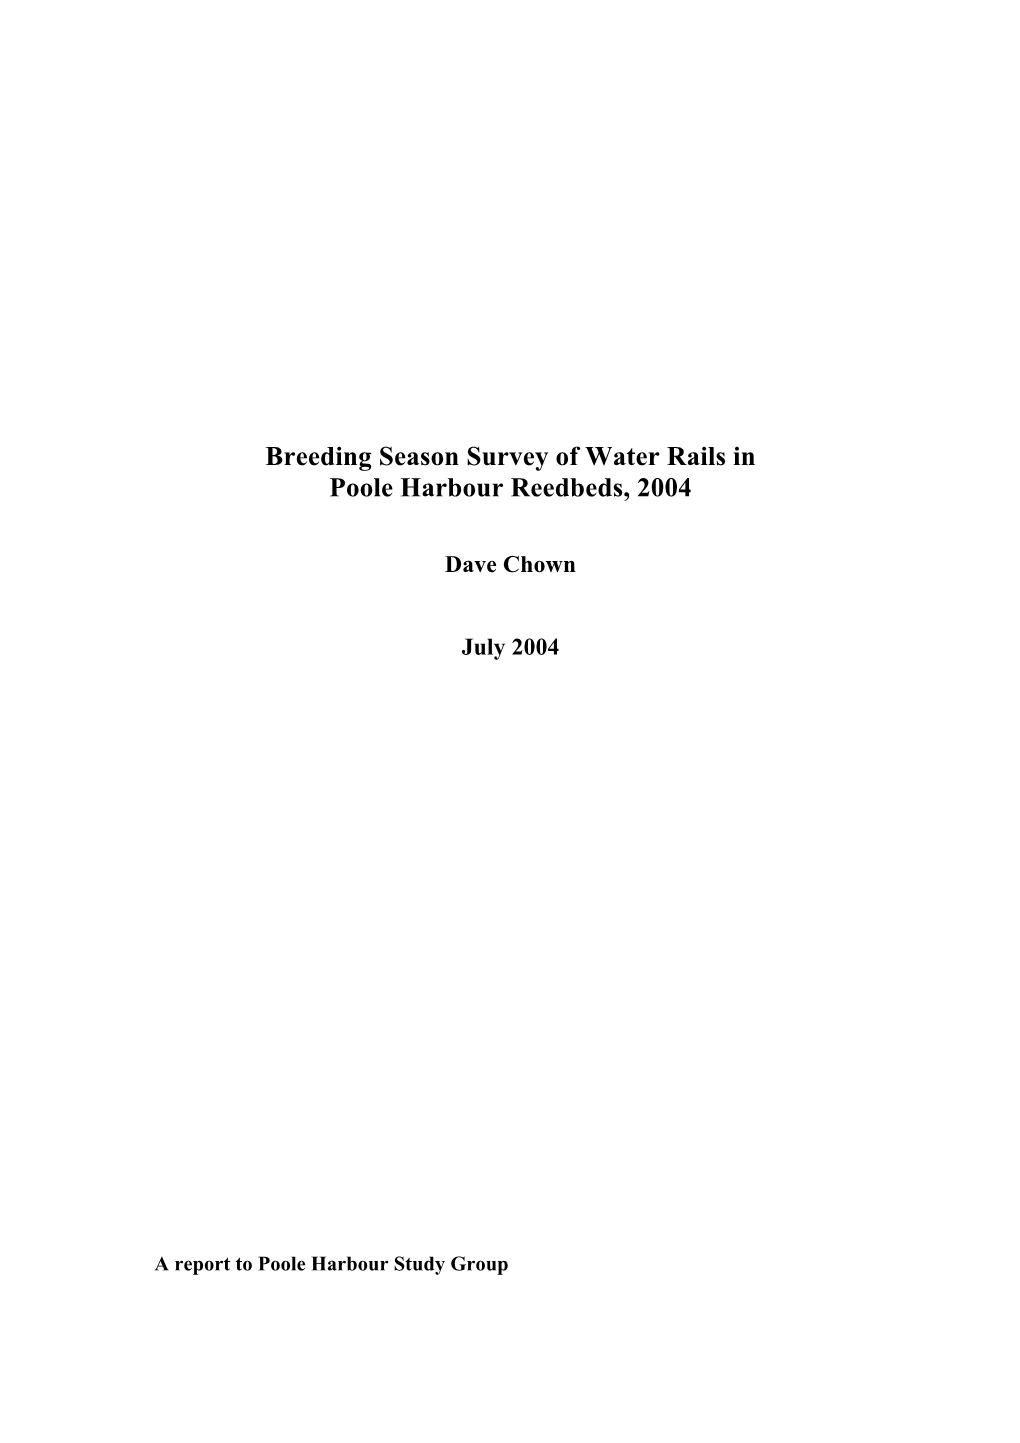 Breeding Season Survey of Water Rails in Poole Harbour Reedbeds, 2004